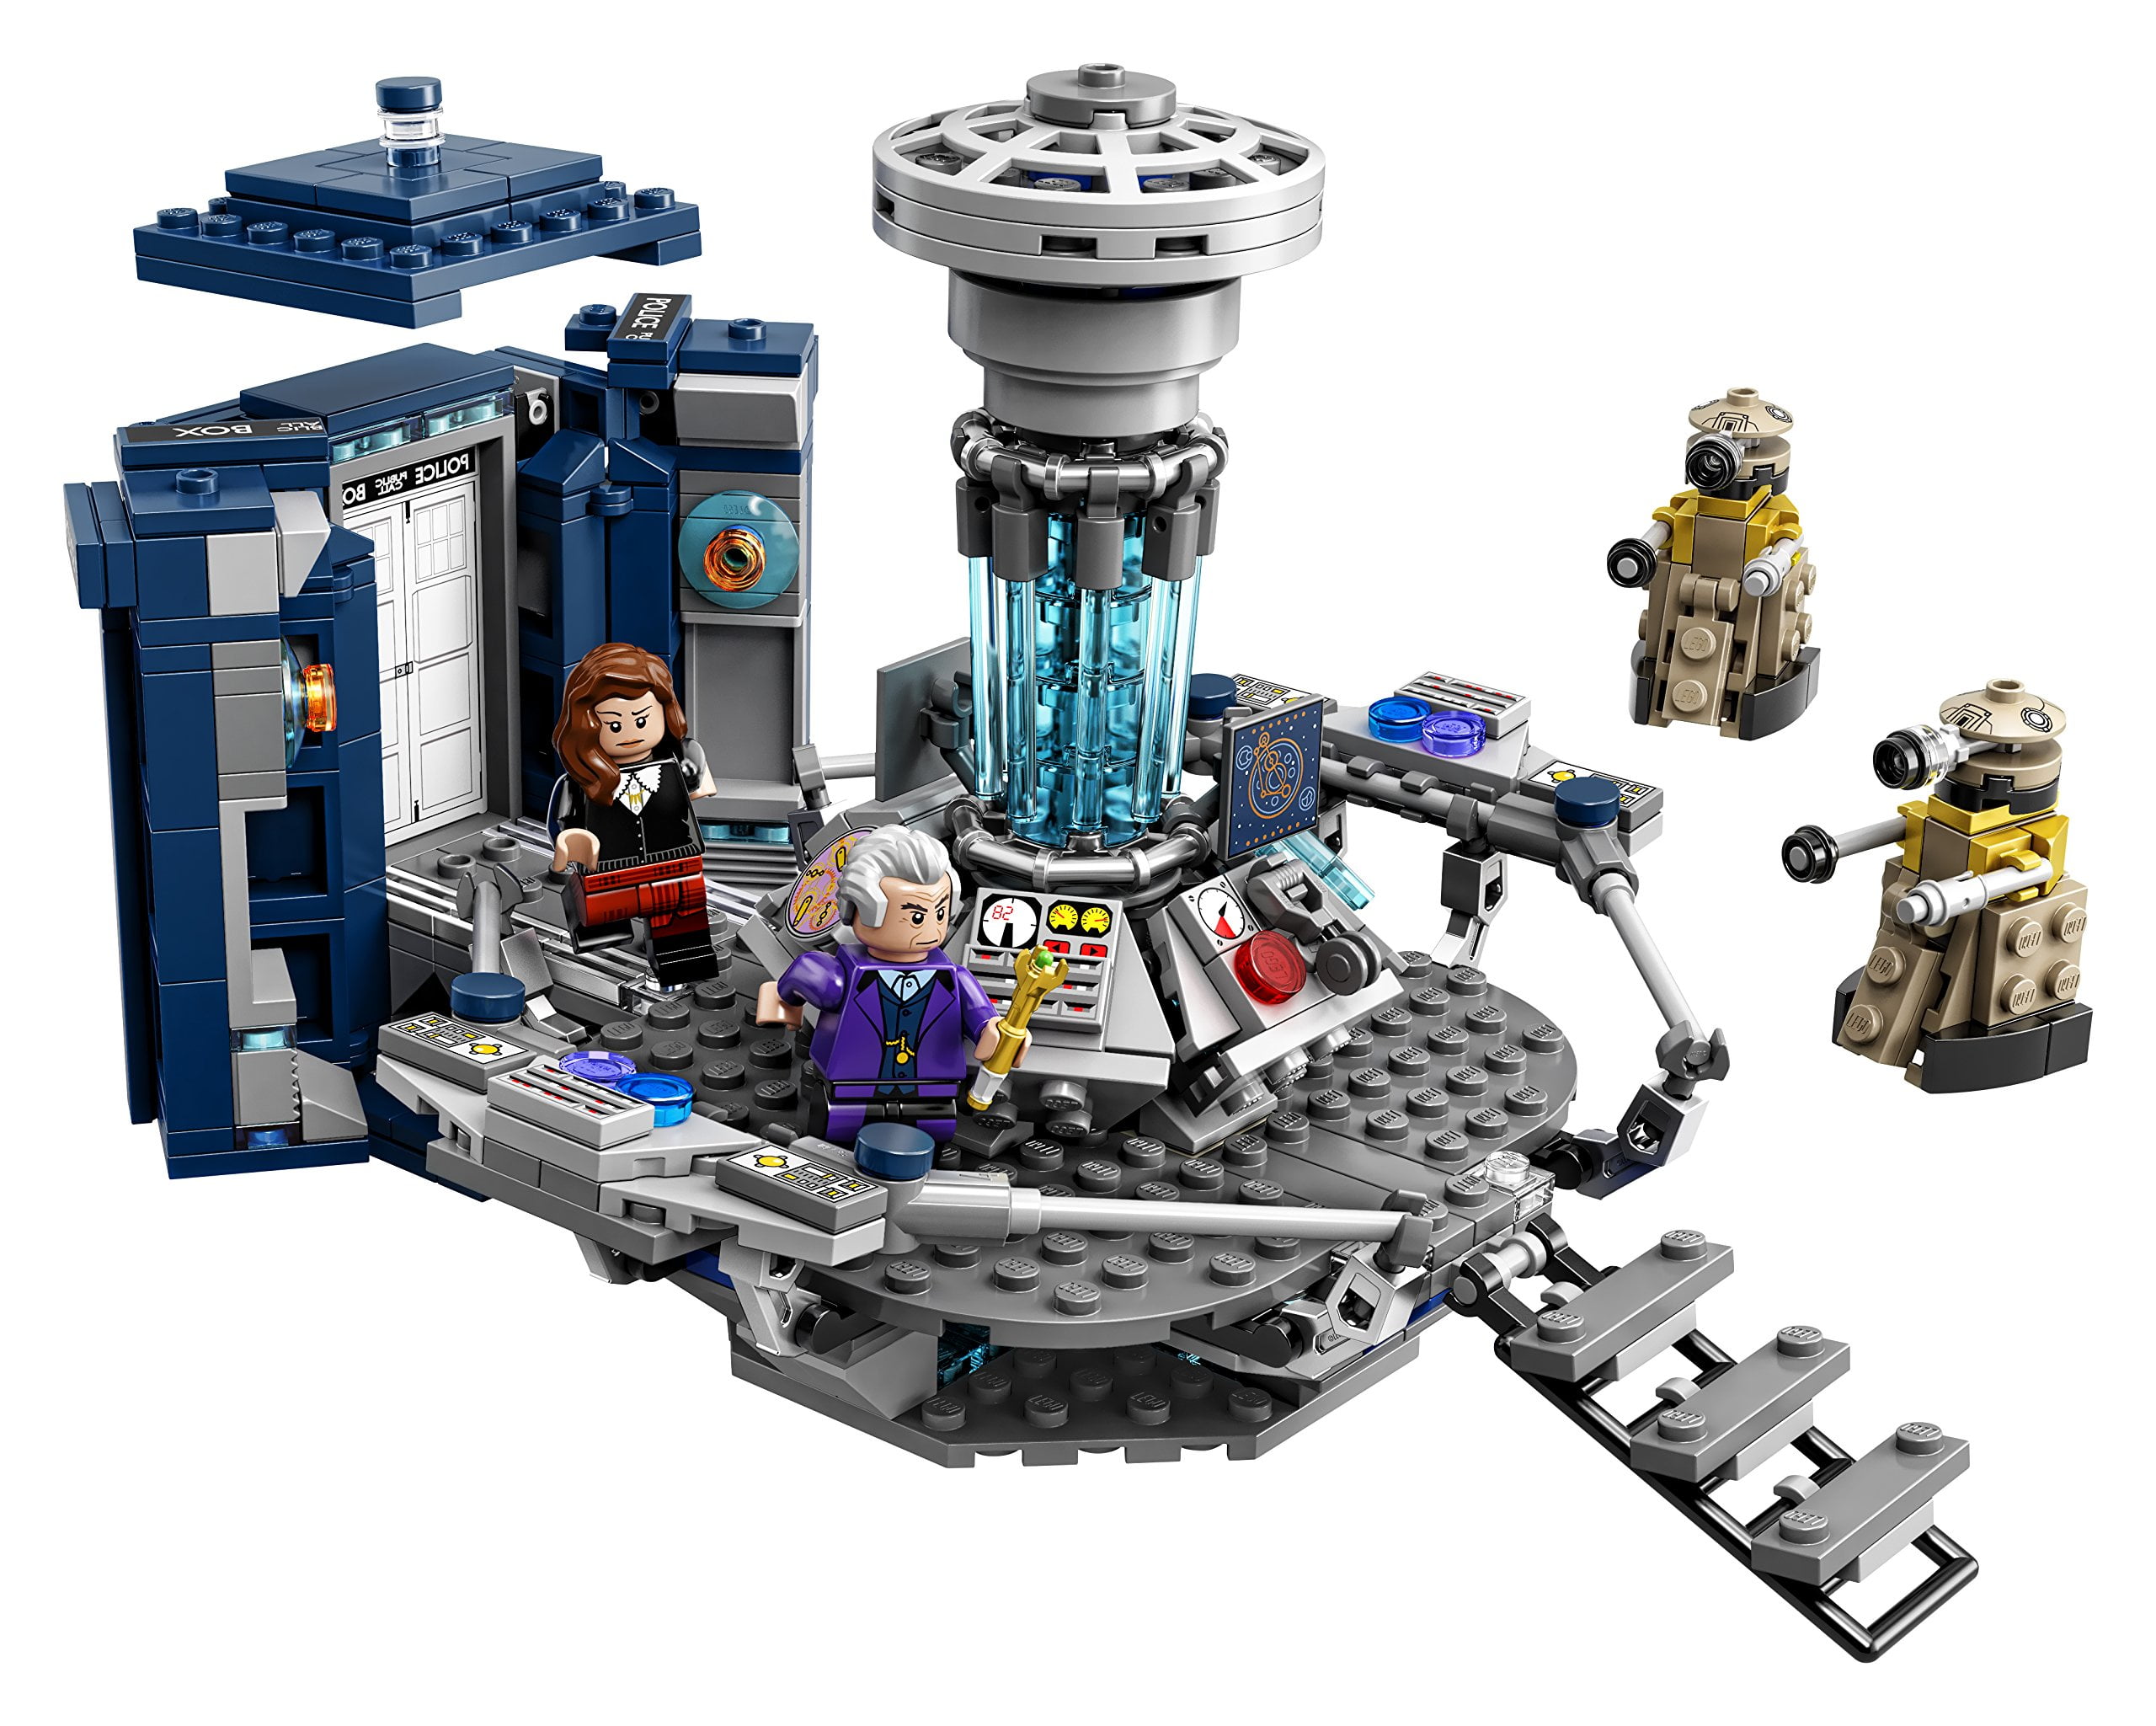 LEGO Doctor Who 21304 - Walmart.com